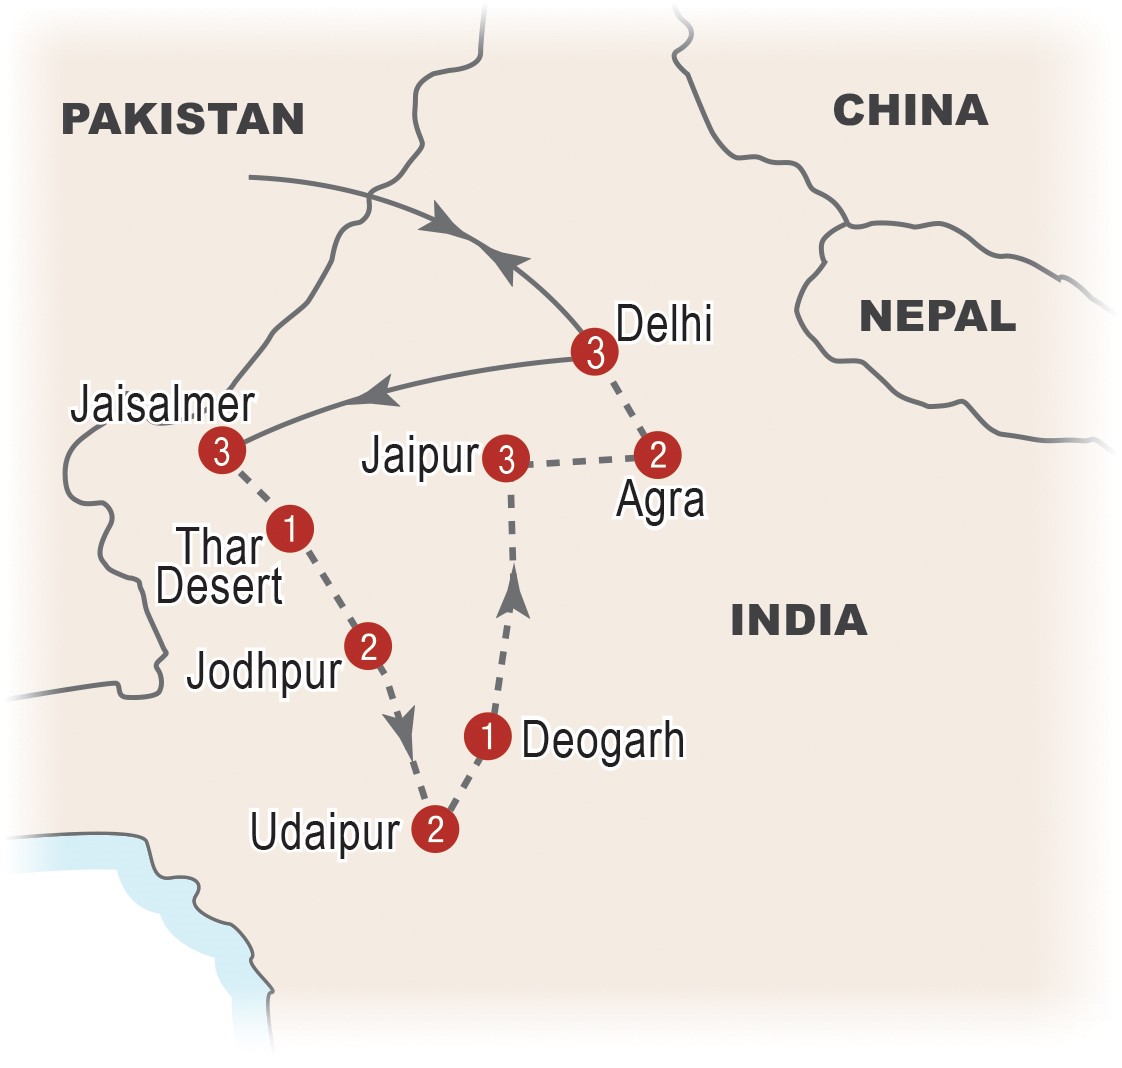 Map of Rajasthan